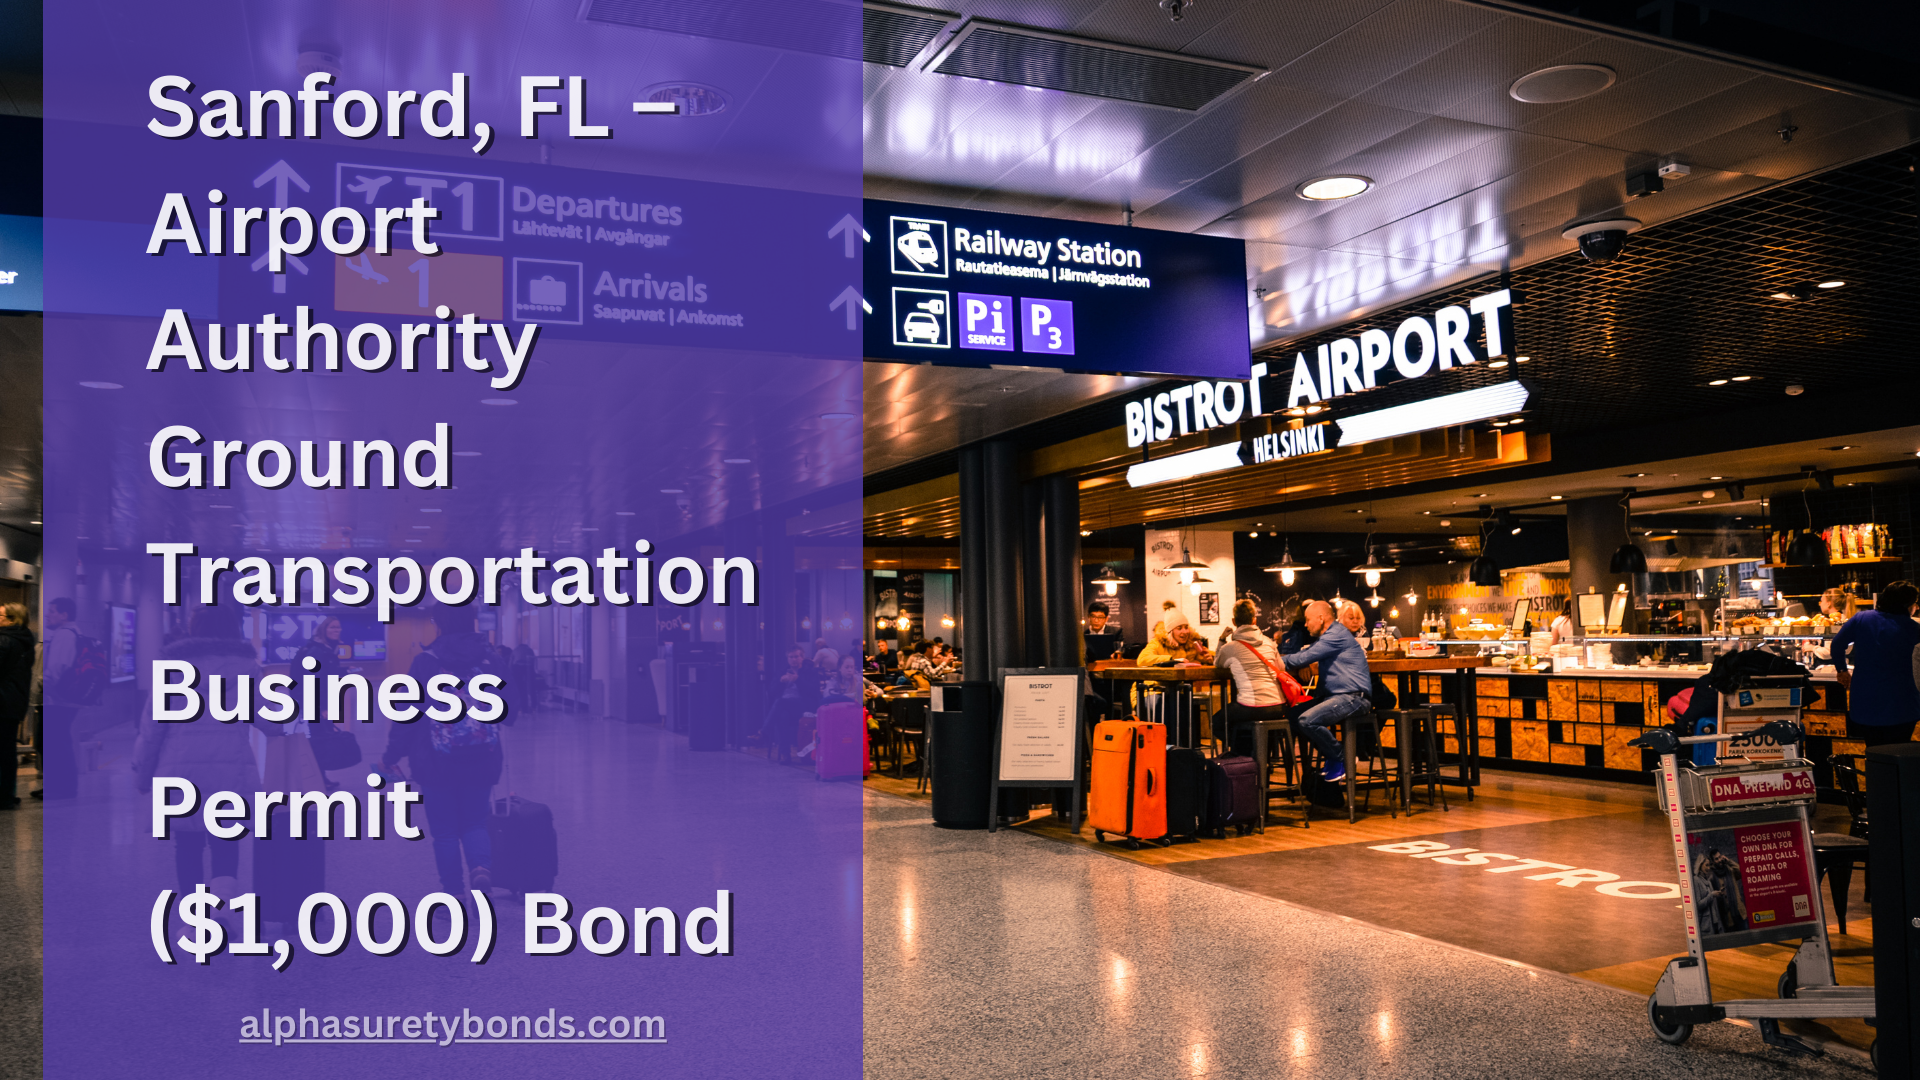 Sanford, FL – Airport Authority Ground Transportation Business Permit ($1,000) Bond